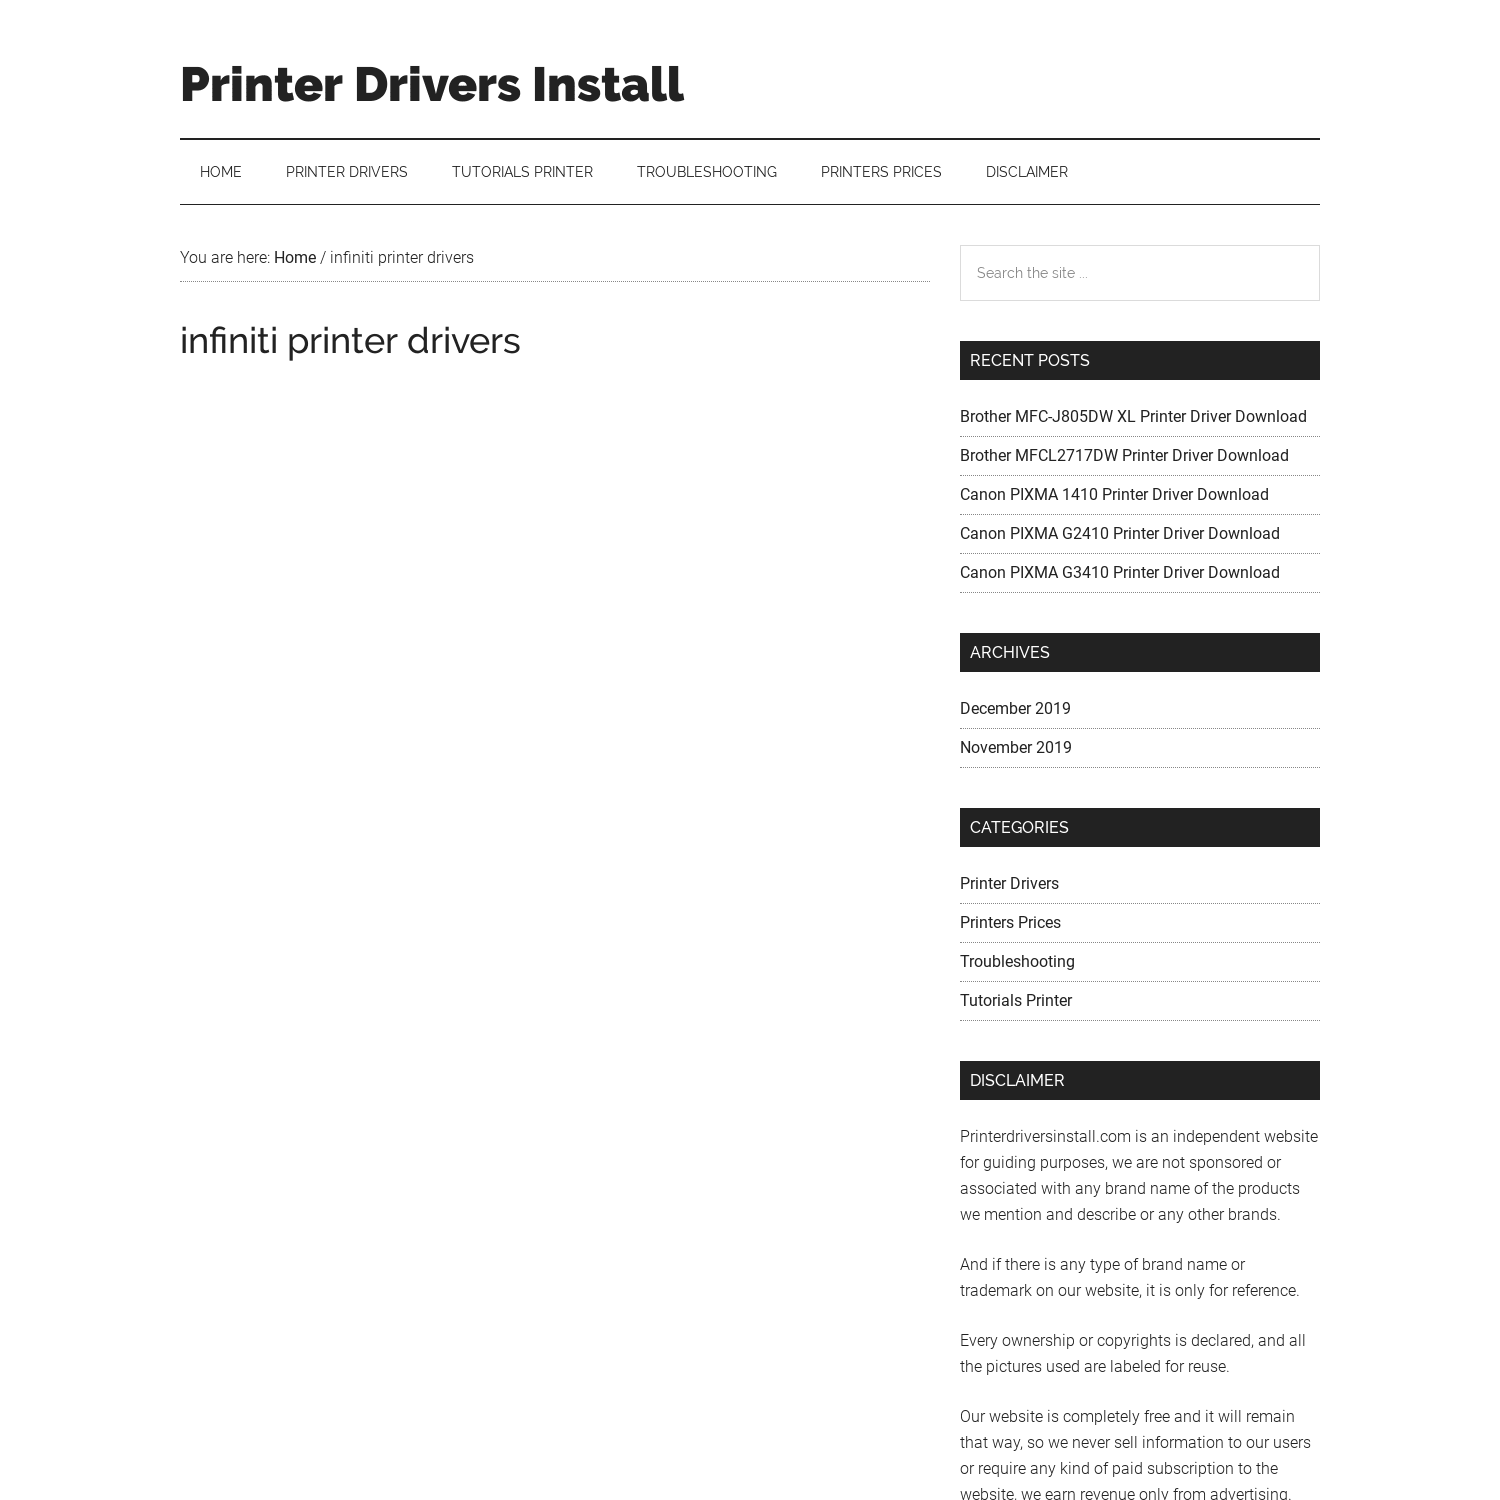 infiniti printer drivers - Printer Drivers Install